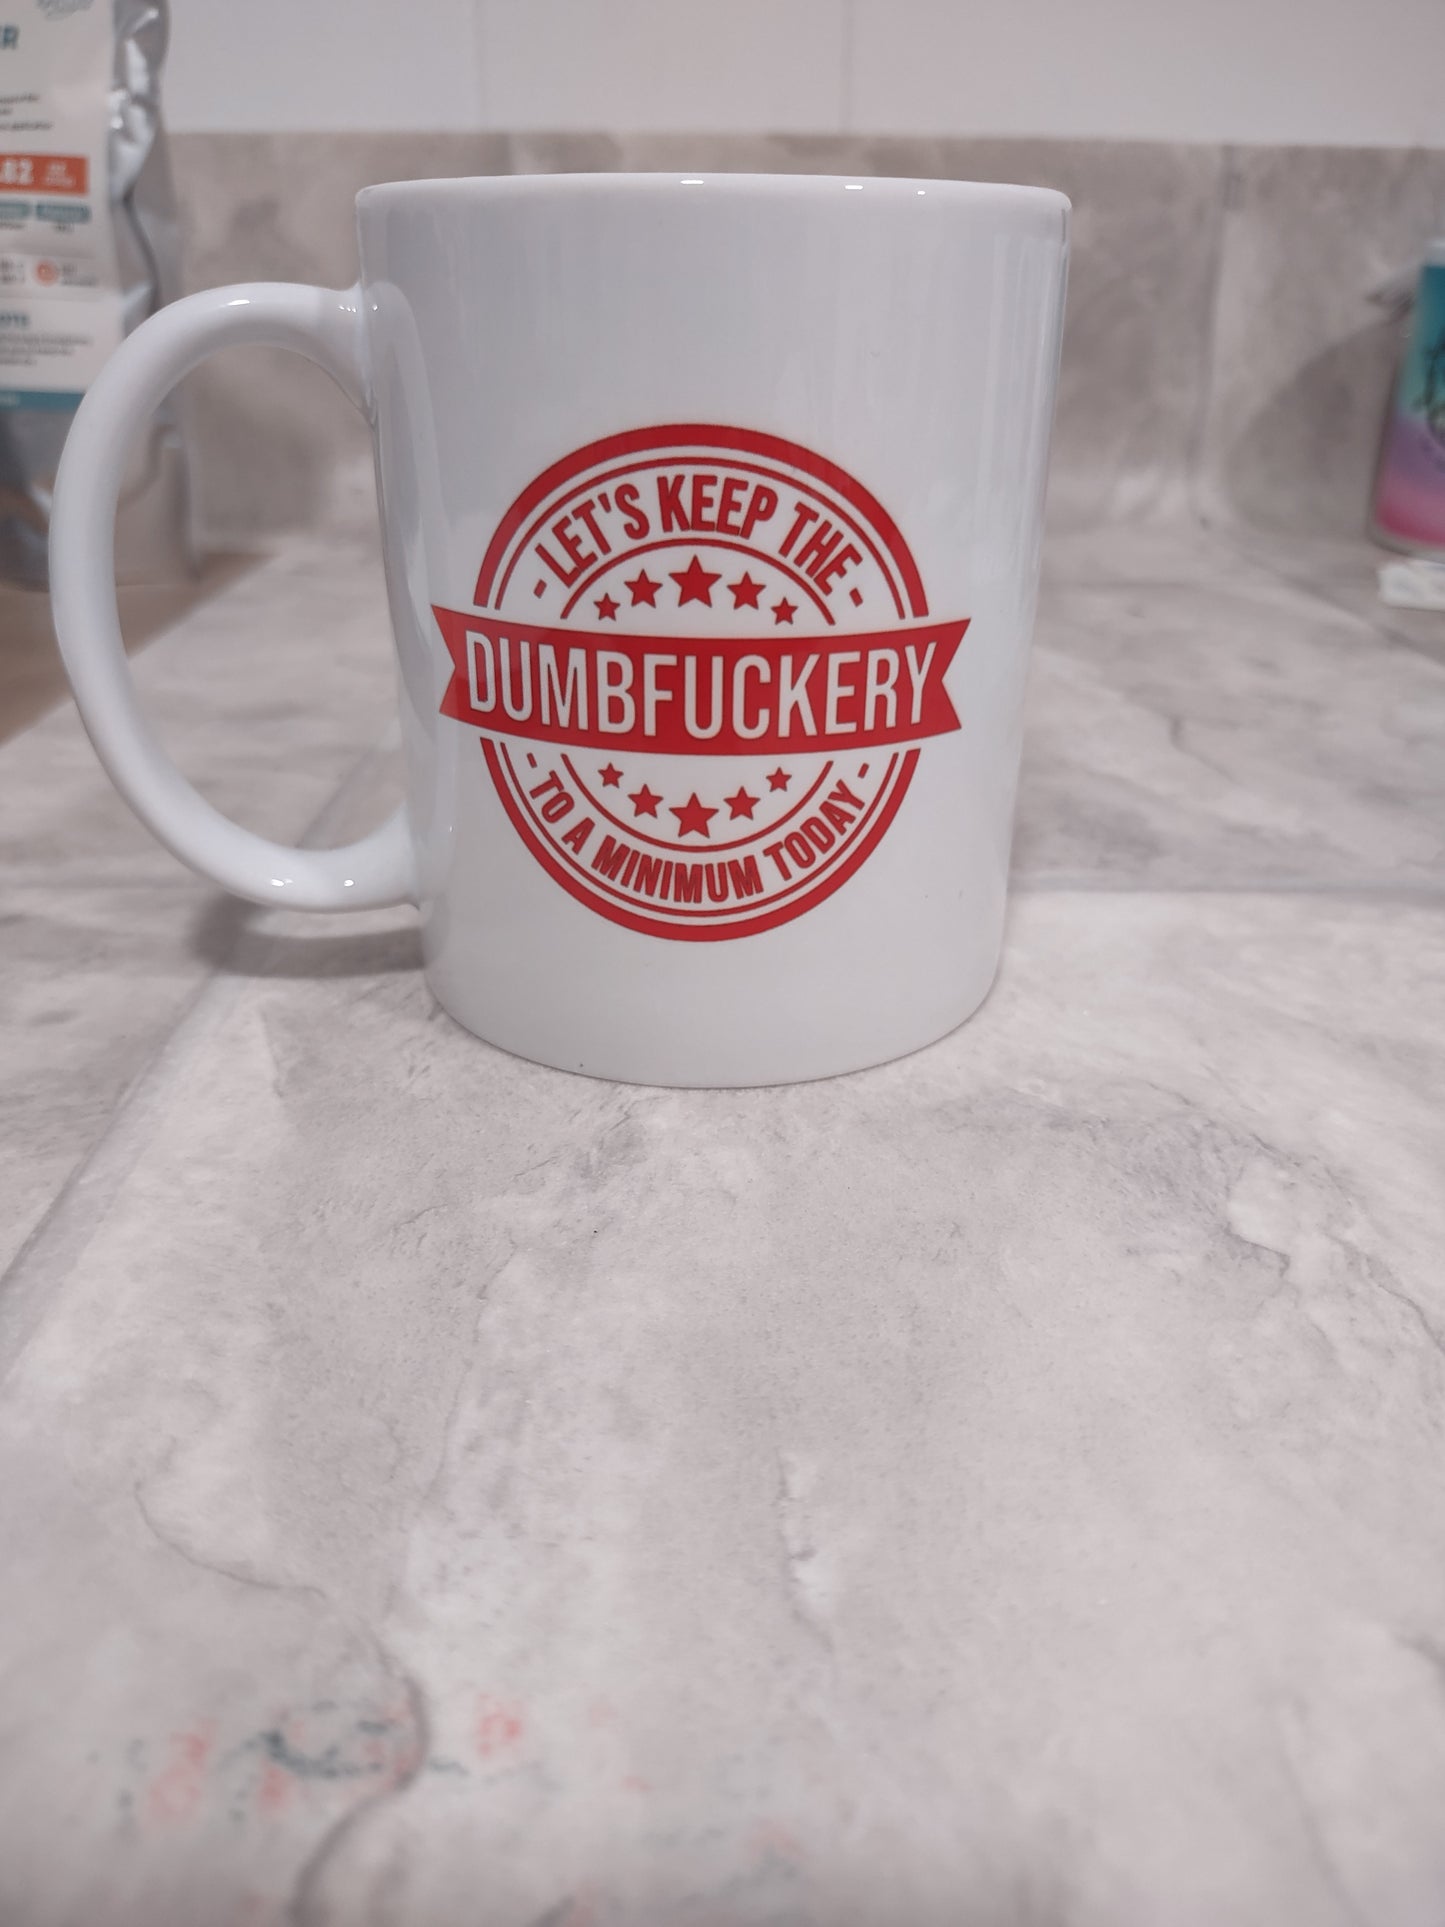 Let's Keep the Dumbfuckery to a Minimum Mug